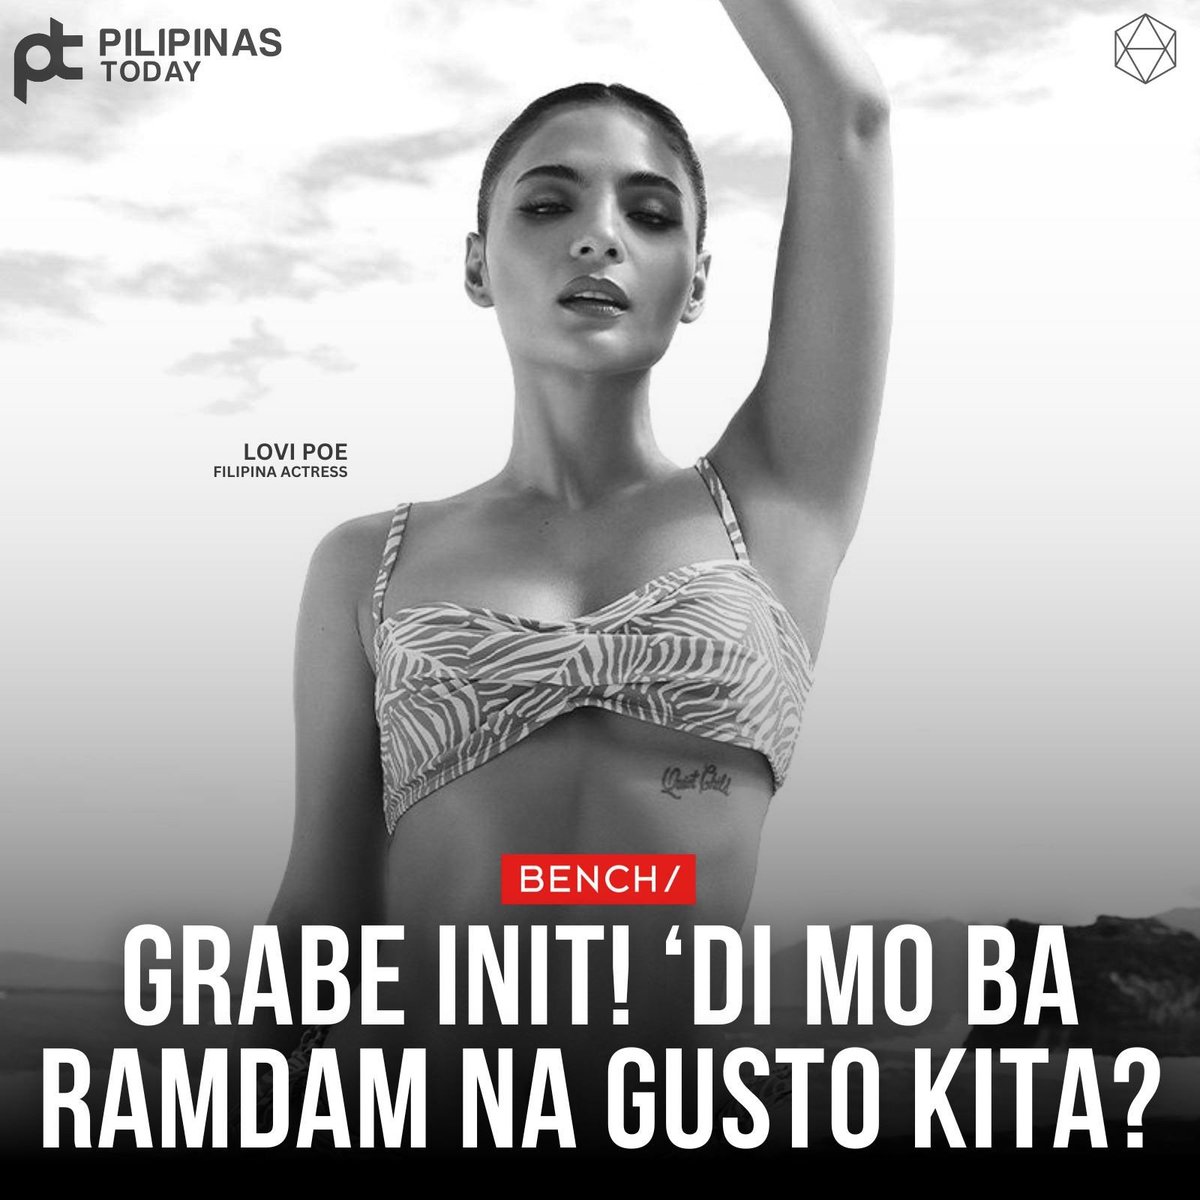 Grabe init! 'Di mo ba ramdam na gusto kita?

#PilipinasToday
#Bench
#LoviPoe